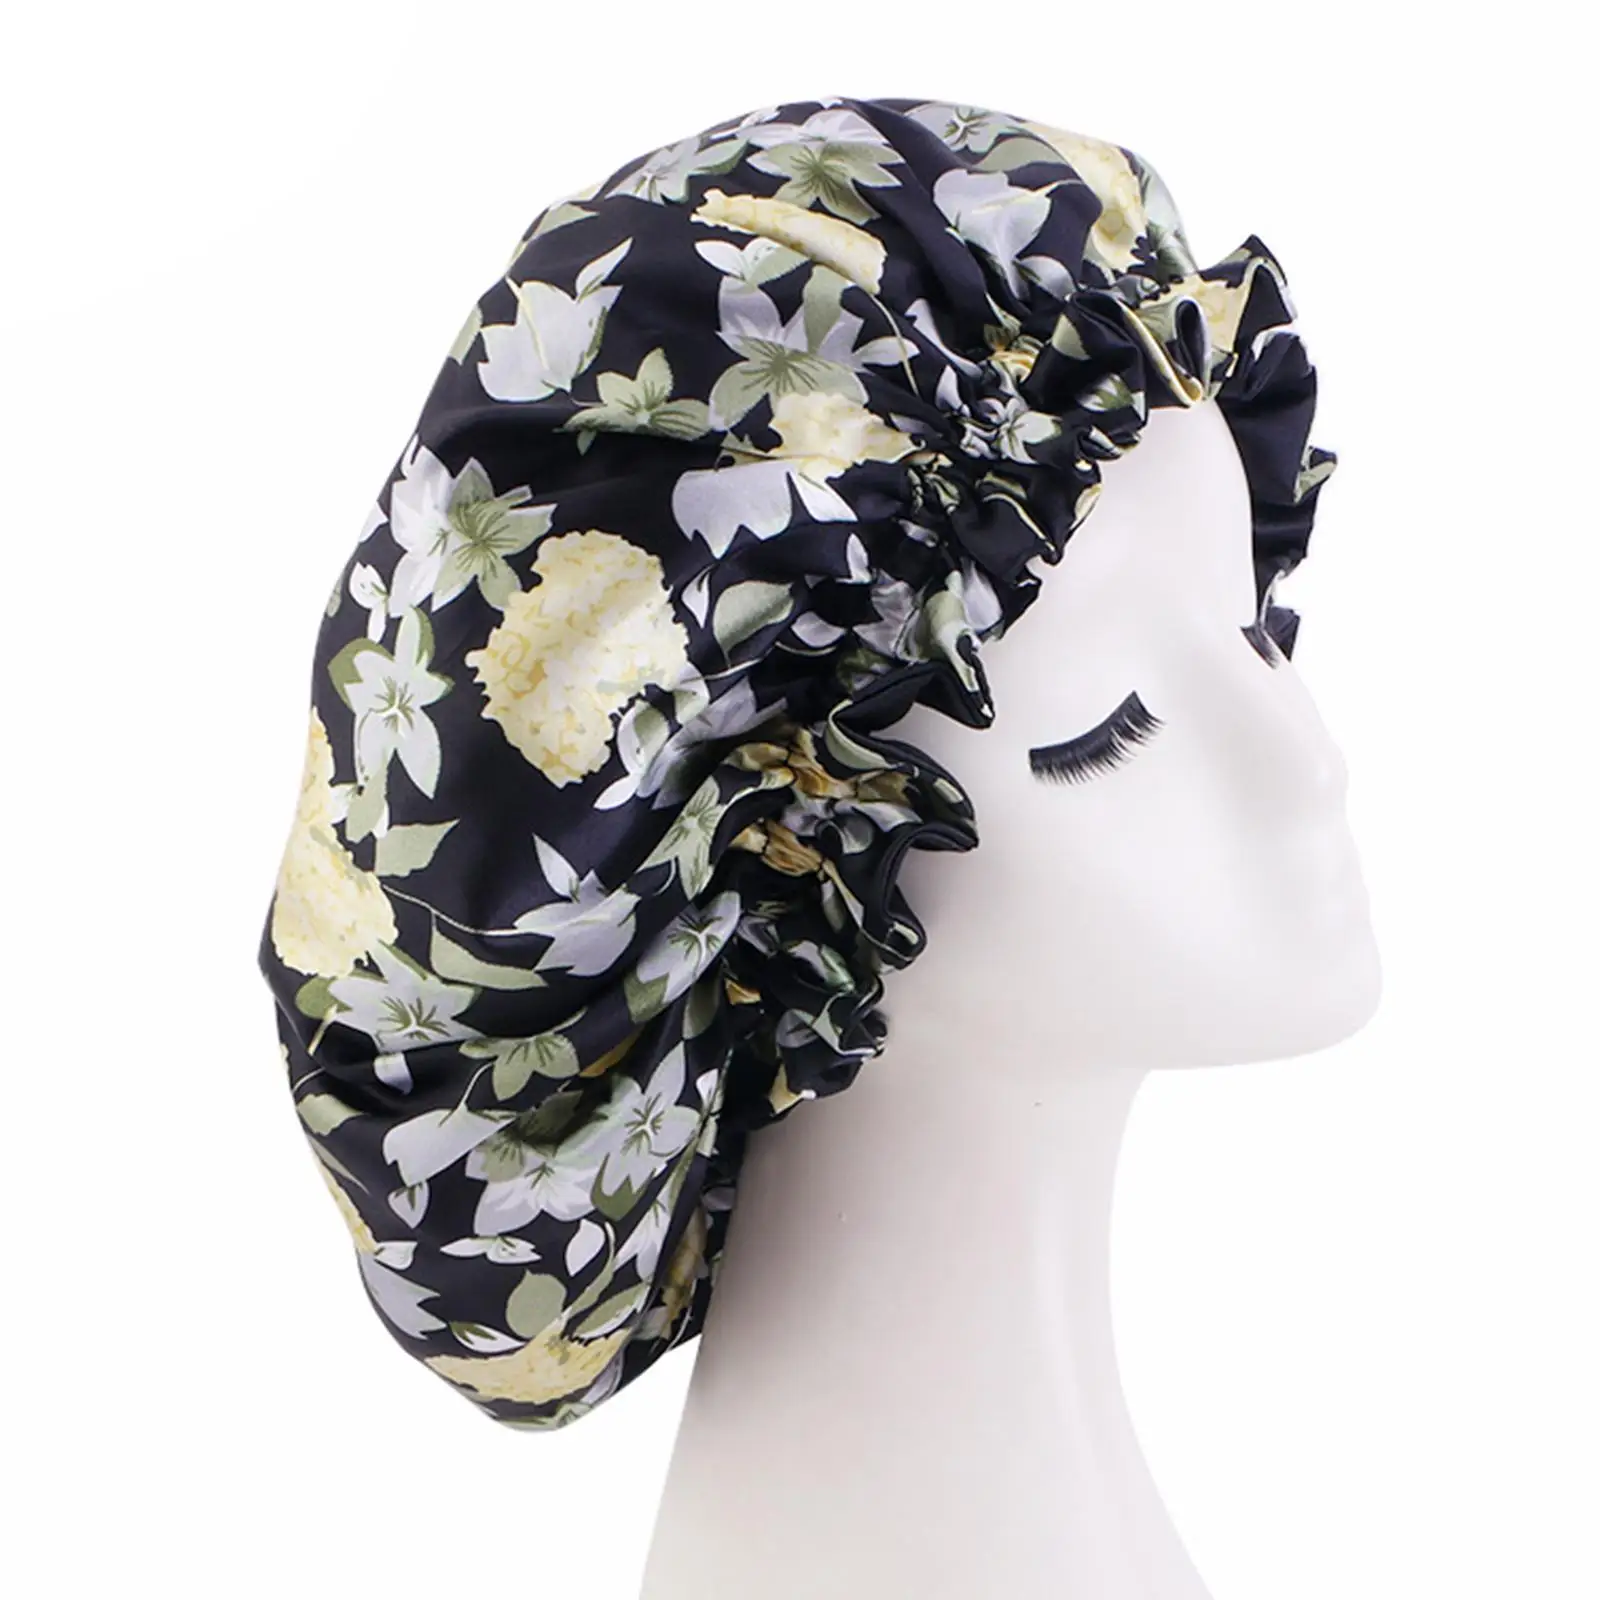 Hair Bonnet caps Reversible Satin Double Silk Layer Soft Head Cover for Girls